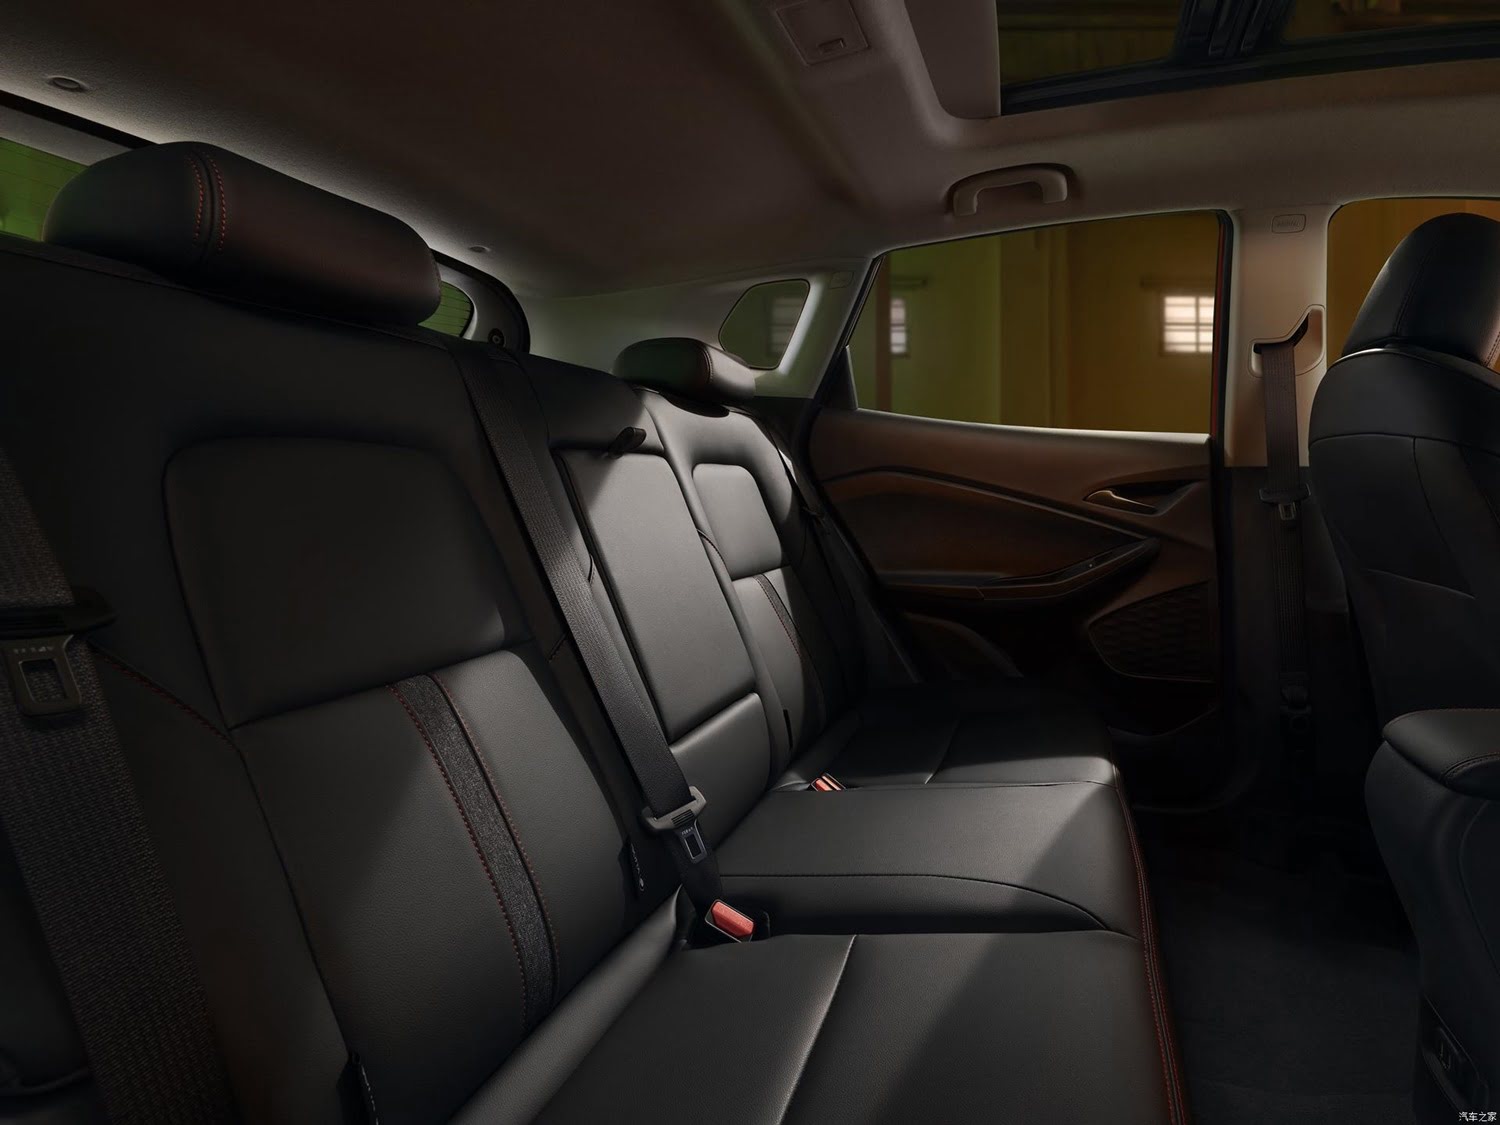 Chevrolet Tracker interior - Seats